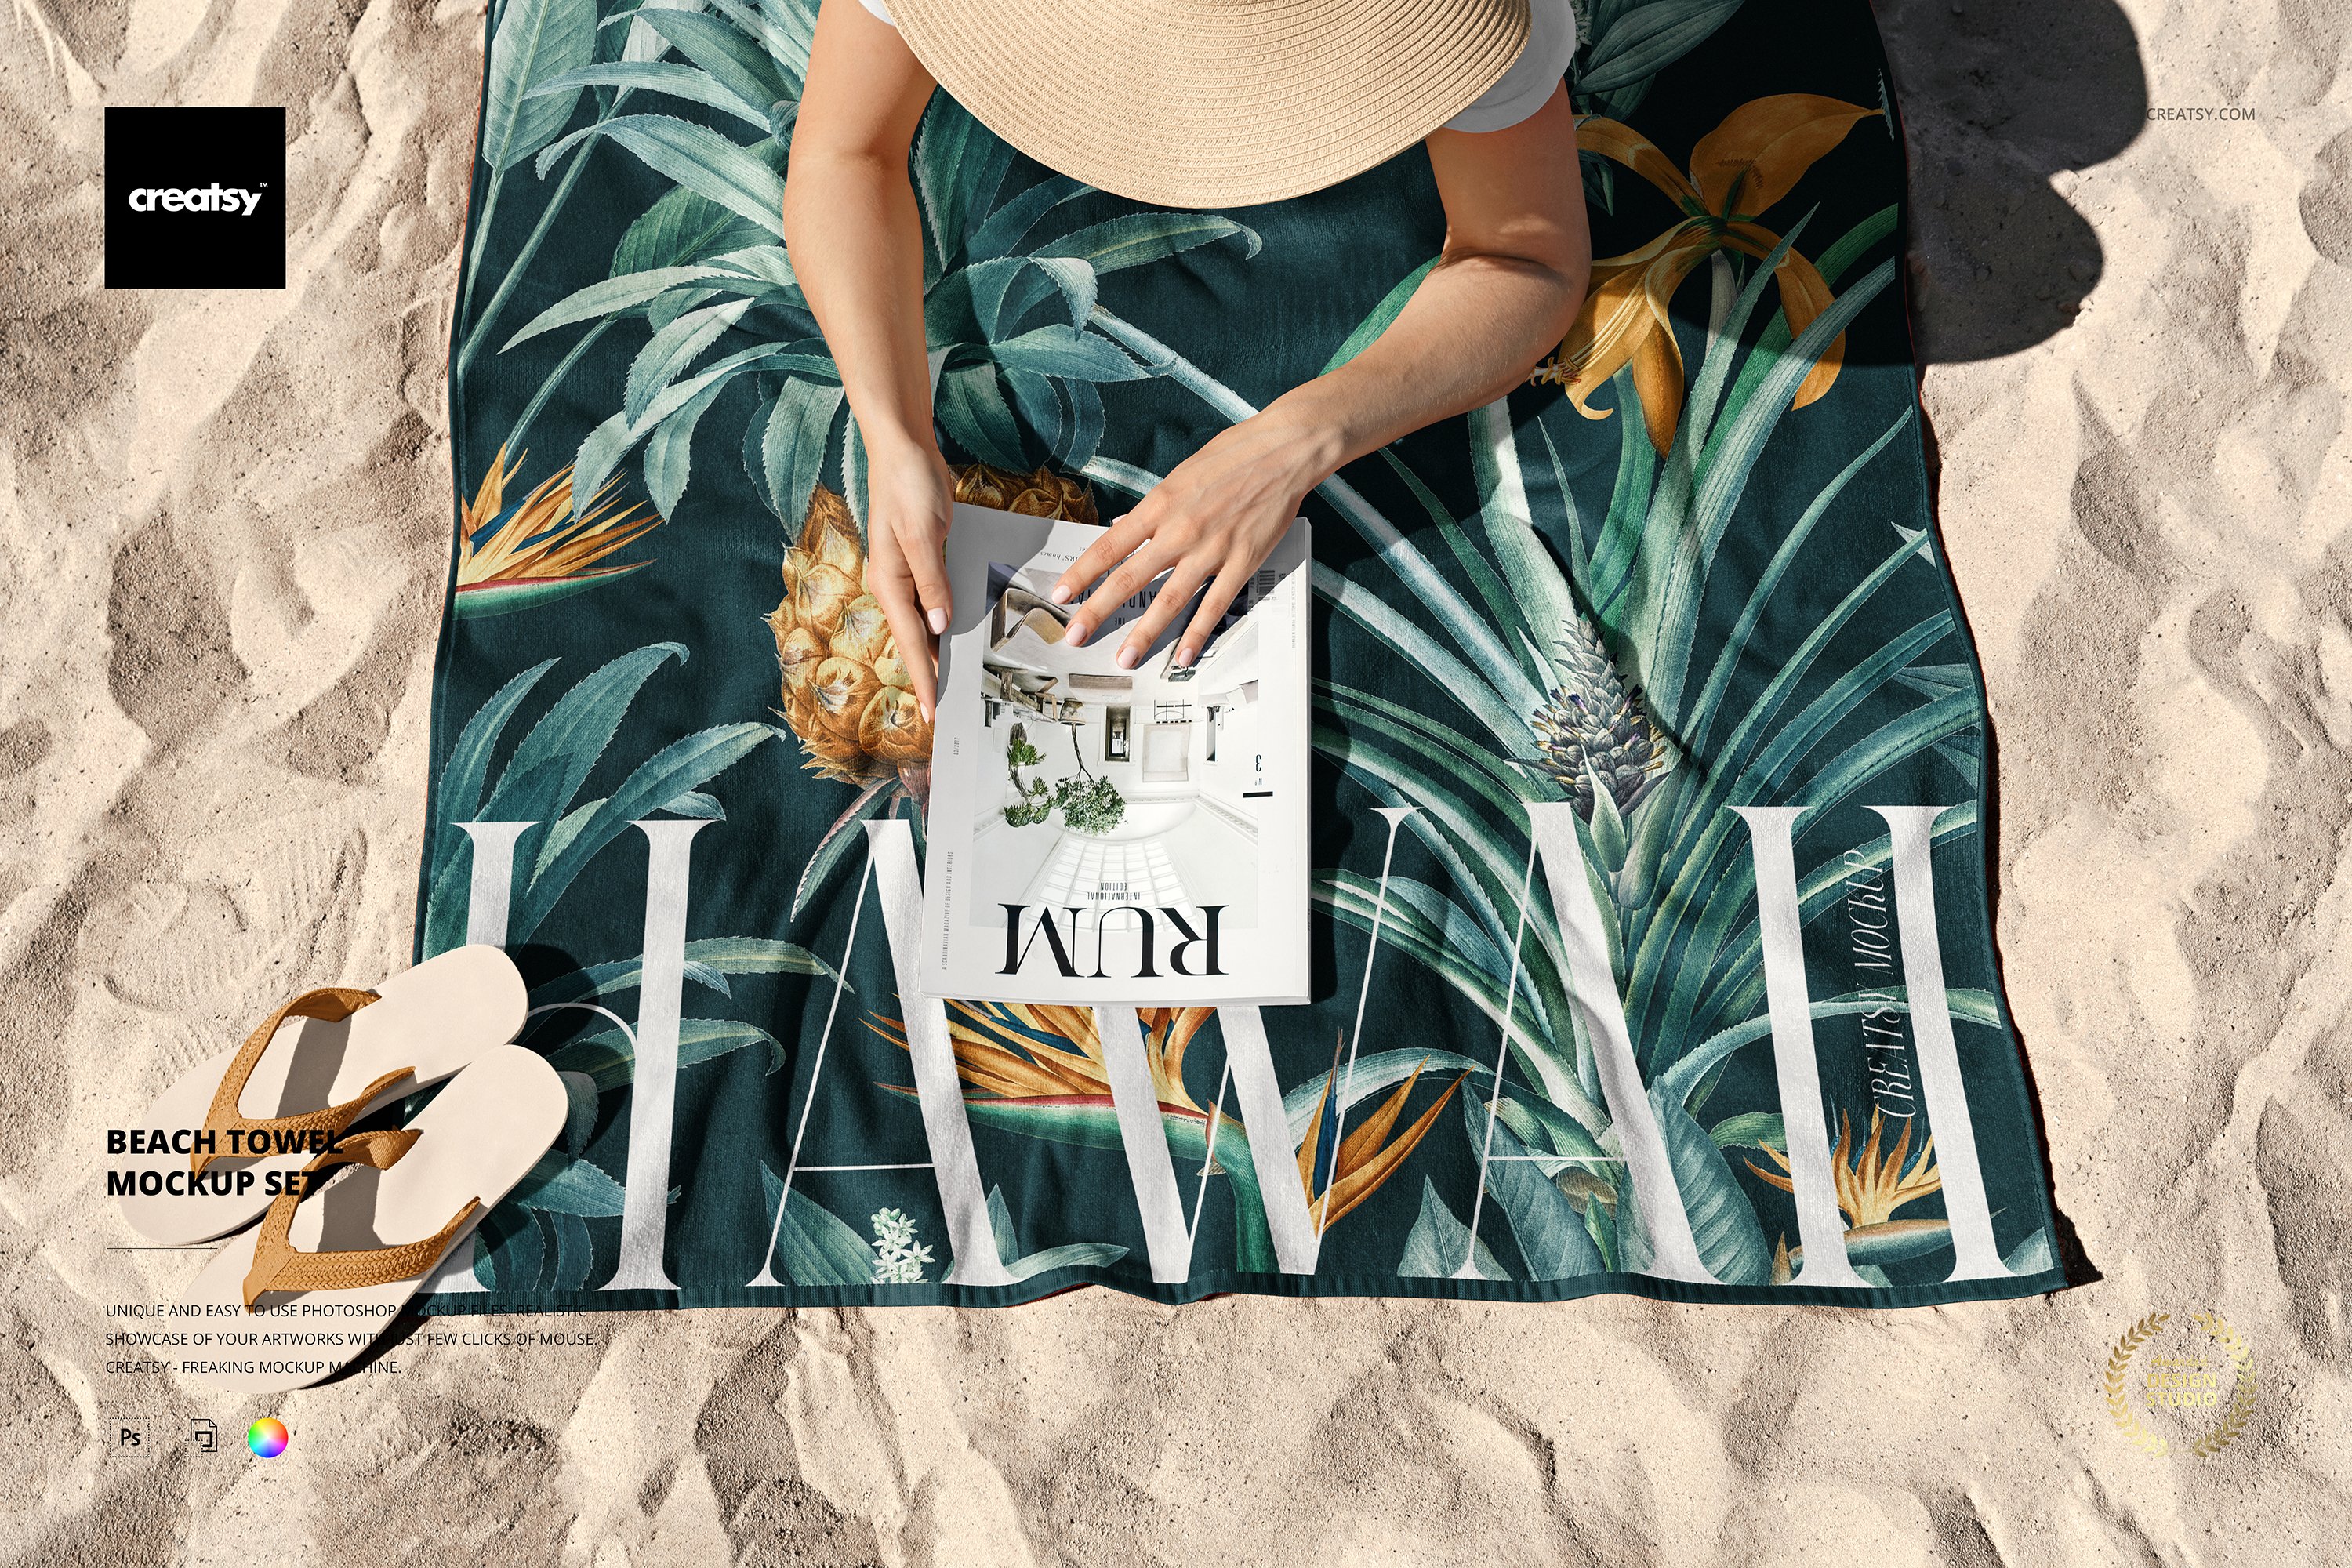 Beach Towel Mockup Set cover image.